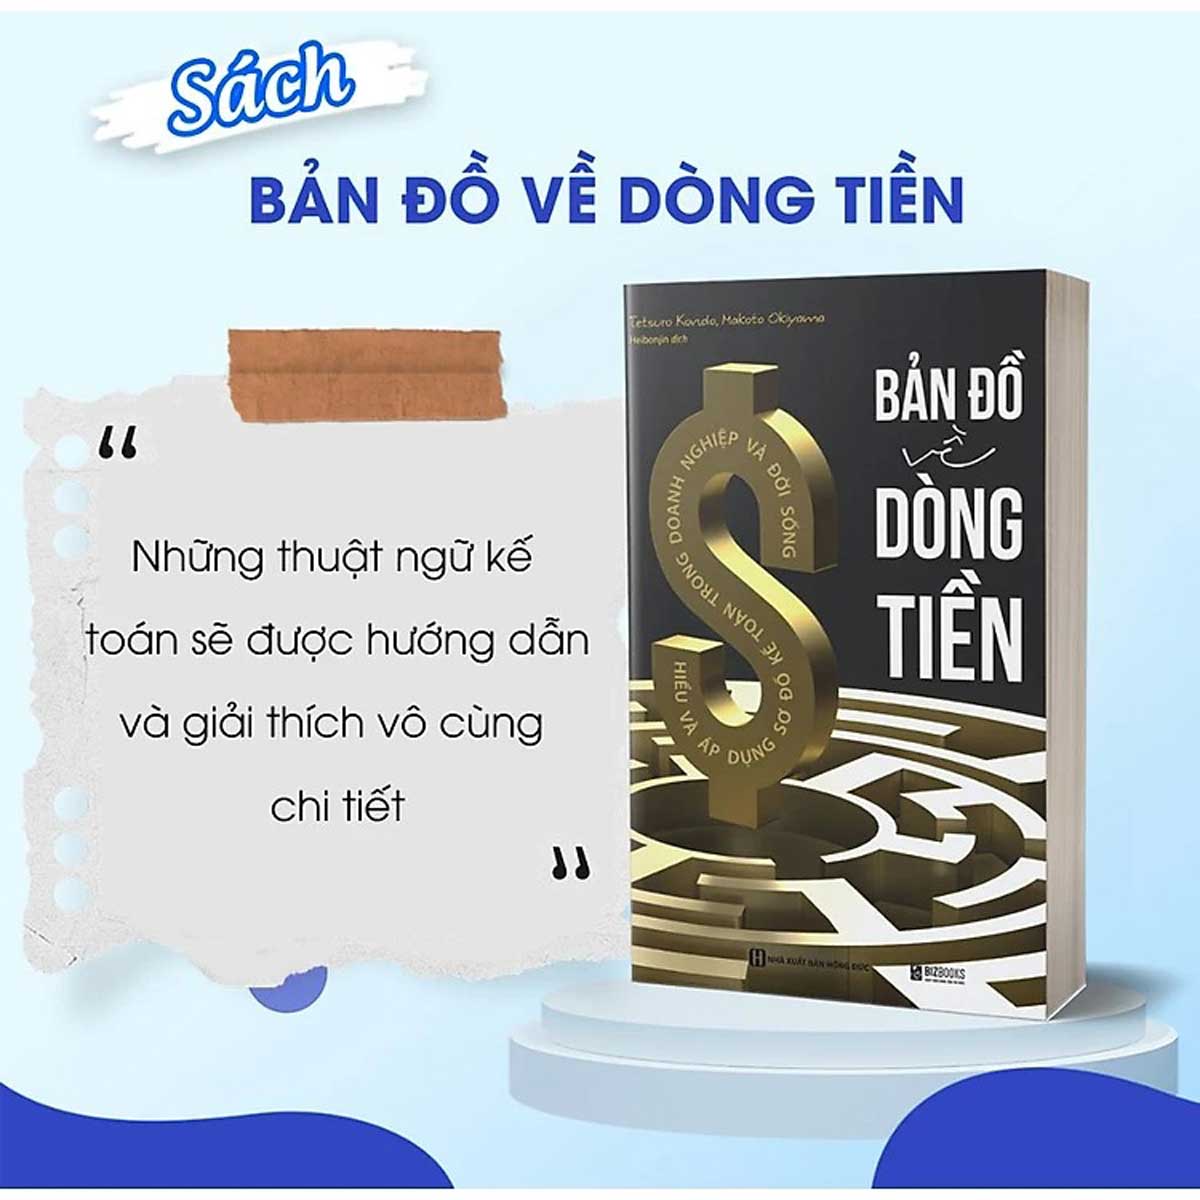 Cuon sach Ban do ve dong tien Hieu va ap dung so do ke toan trong doanh nghiep va doi song - 【Review Sách】Bản đồ dòng tiền | Tải Ebook FULL Pdf